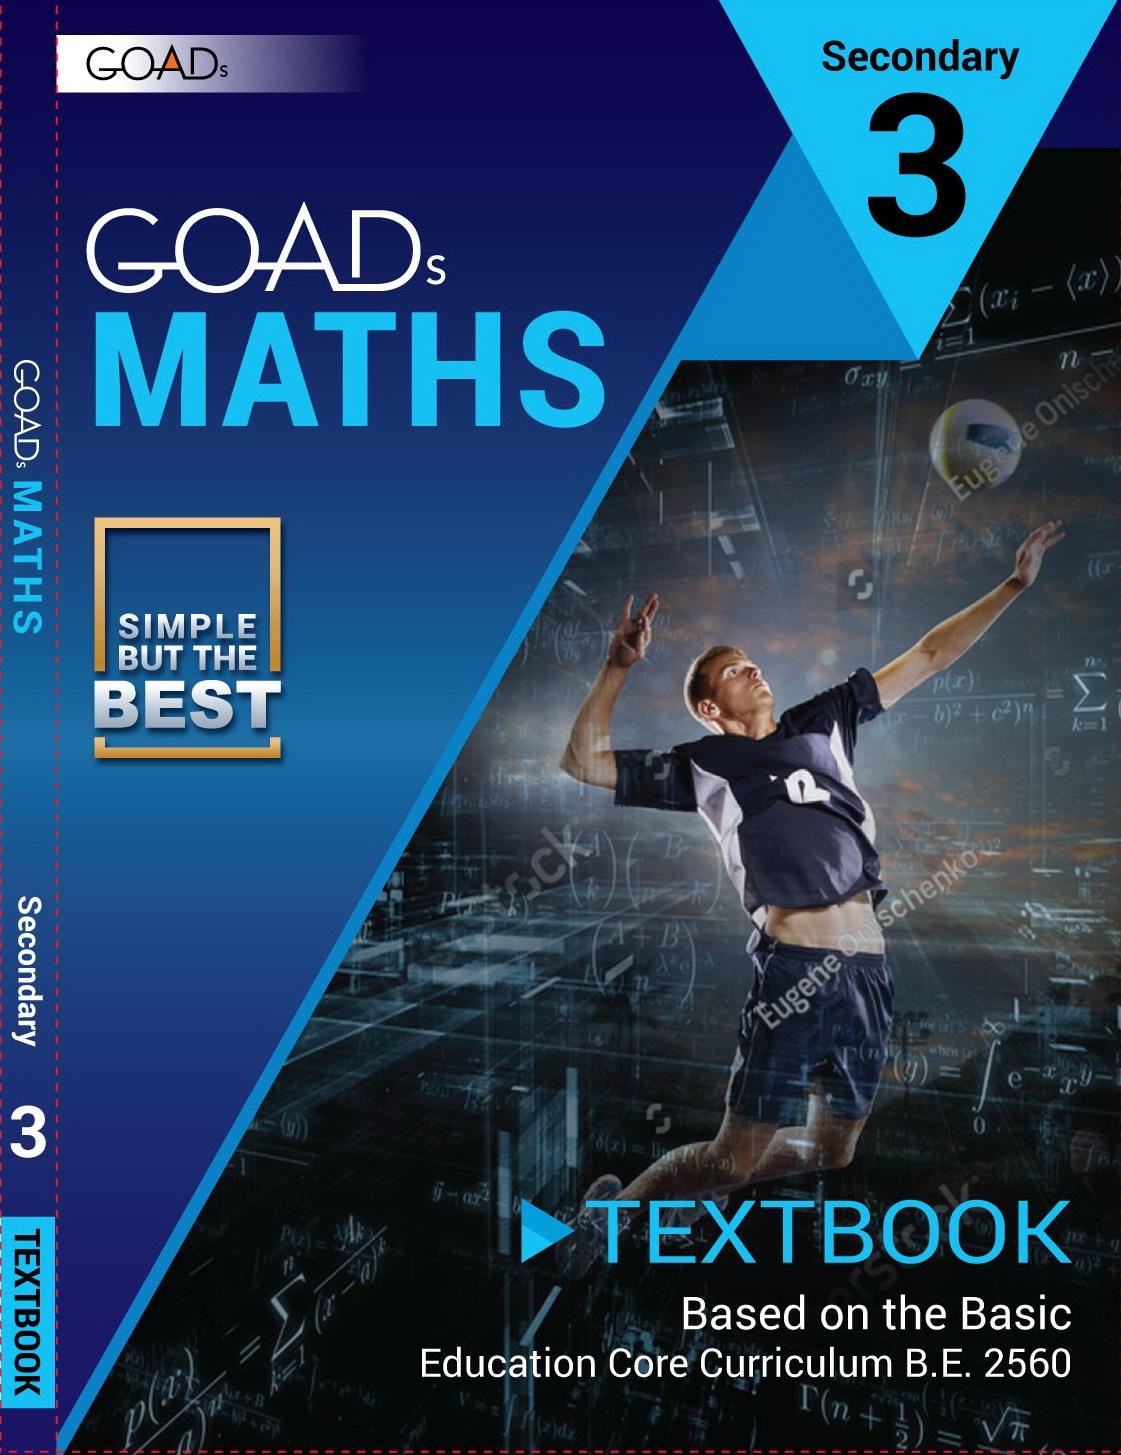 GOADs MATHS for Secondary 3 Textbook